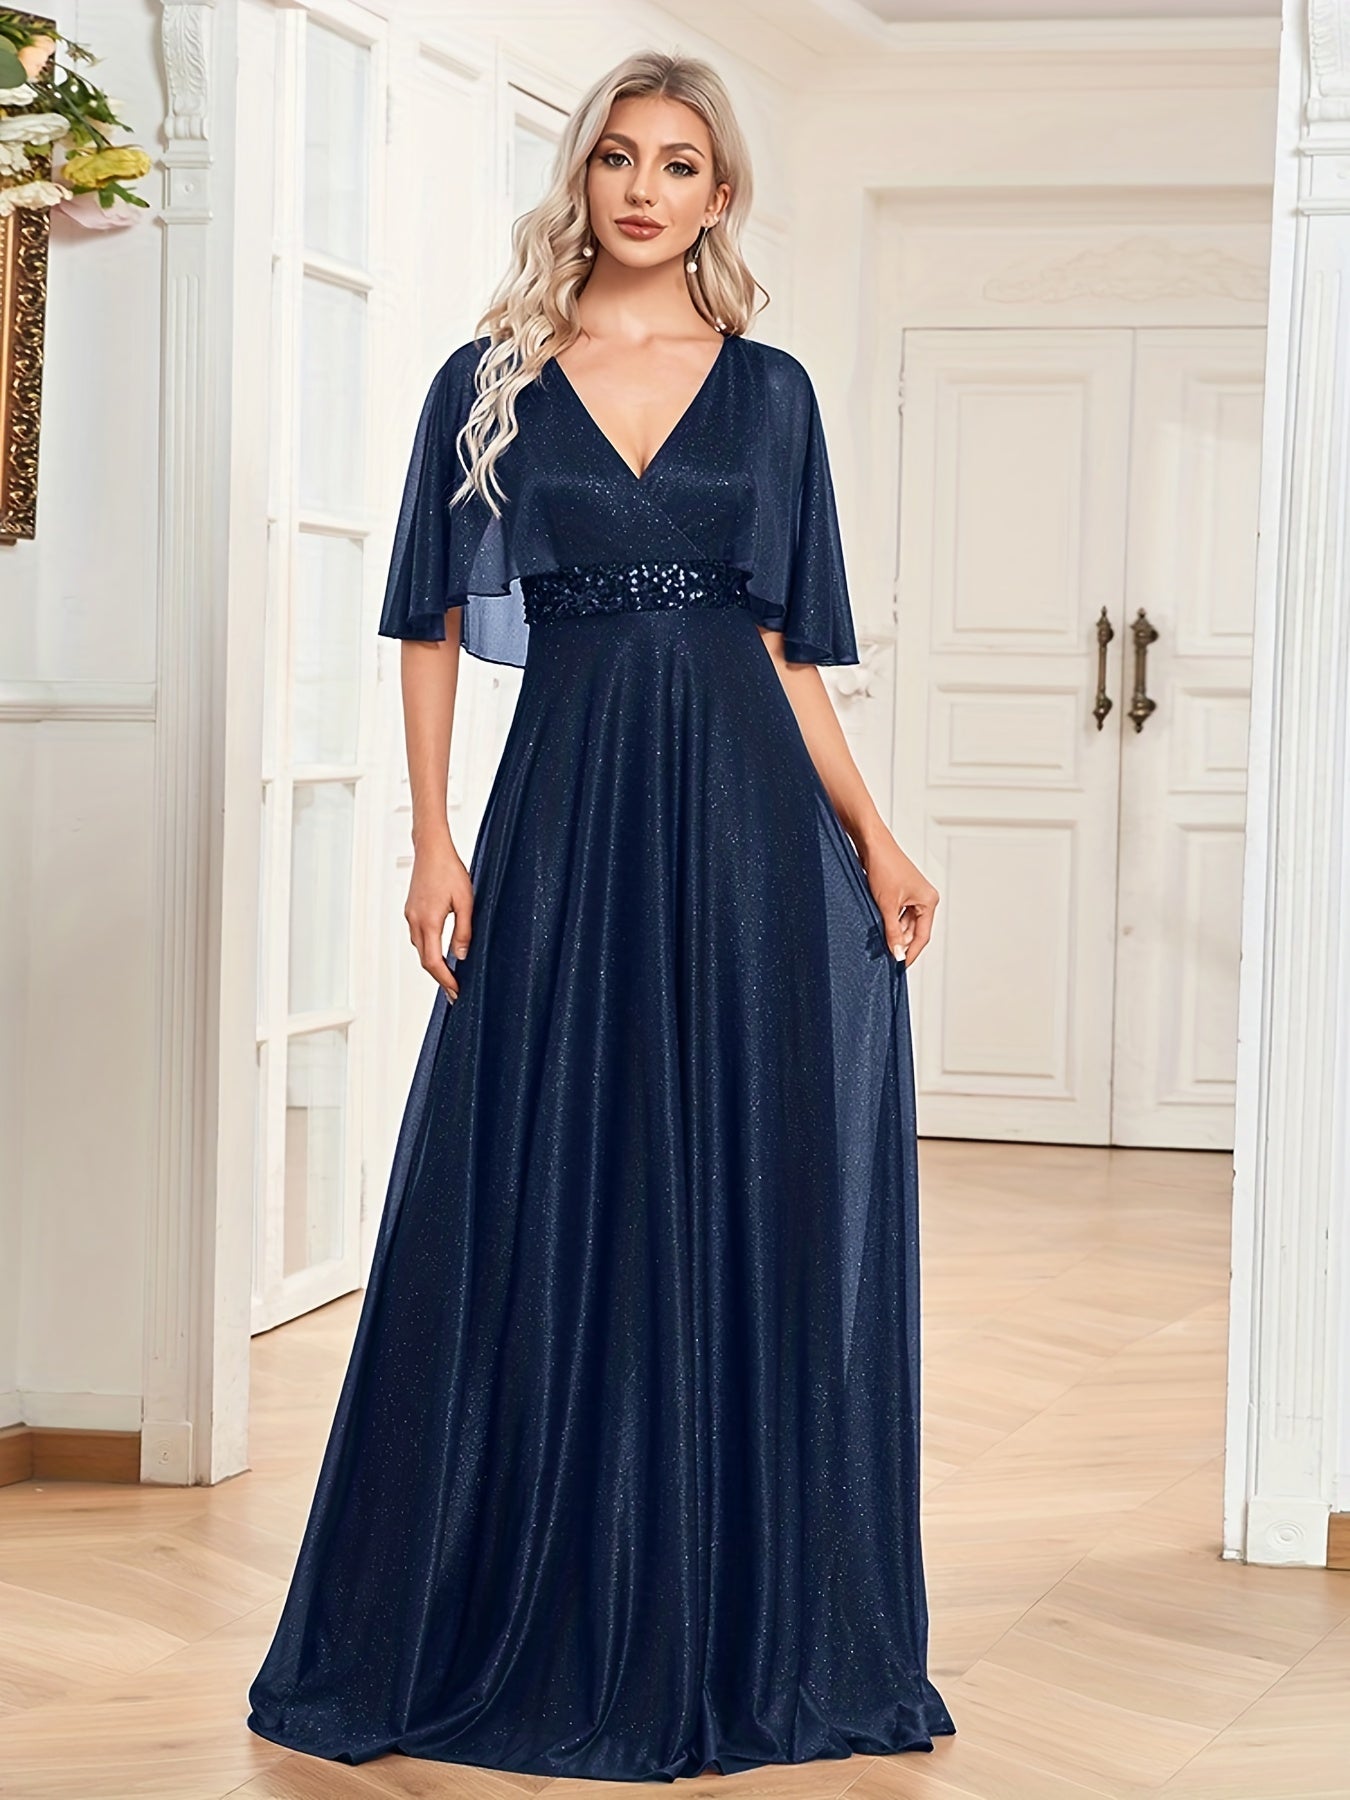 Cape Sleeve Sequin Bridesmaid Dress, Elegant Surplice Neck Floor Length Dress For Wedding Party | XUIBOL